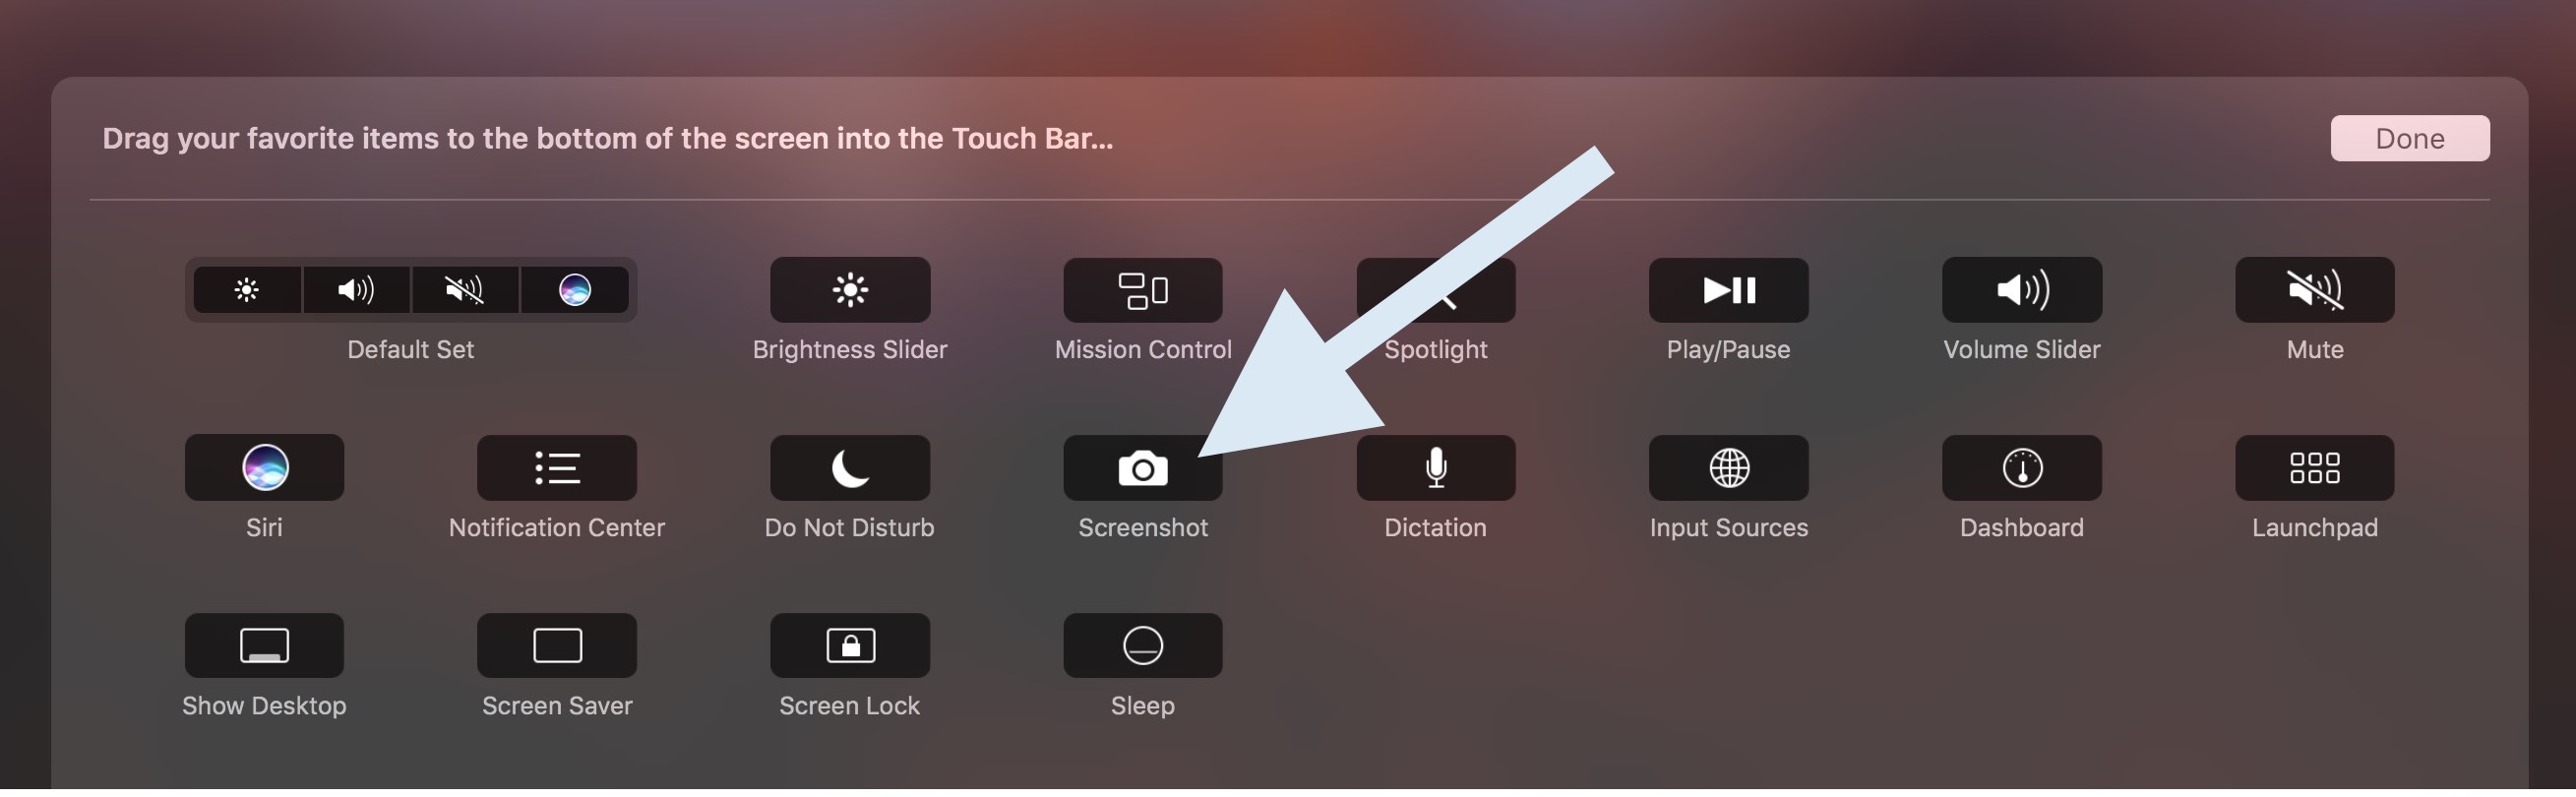 touch bar demo app